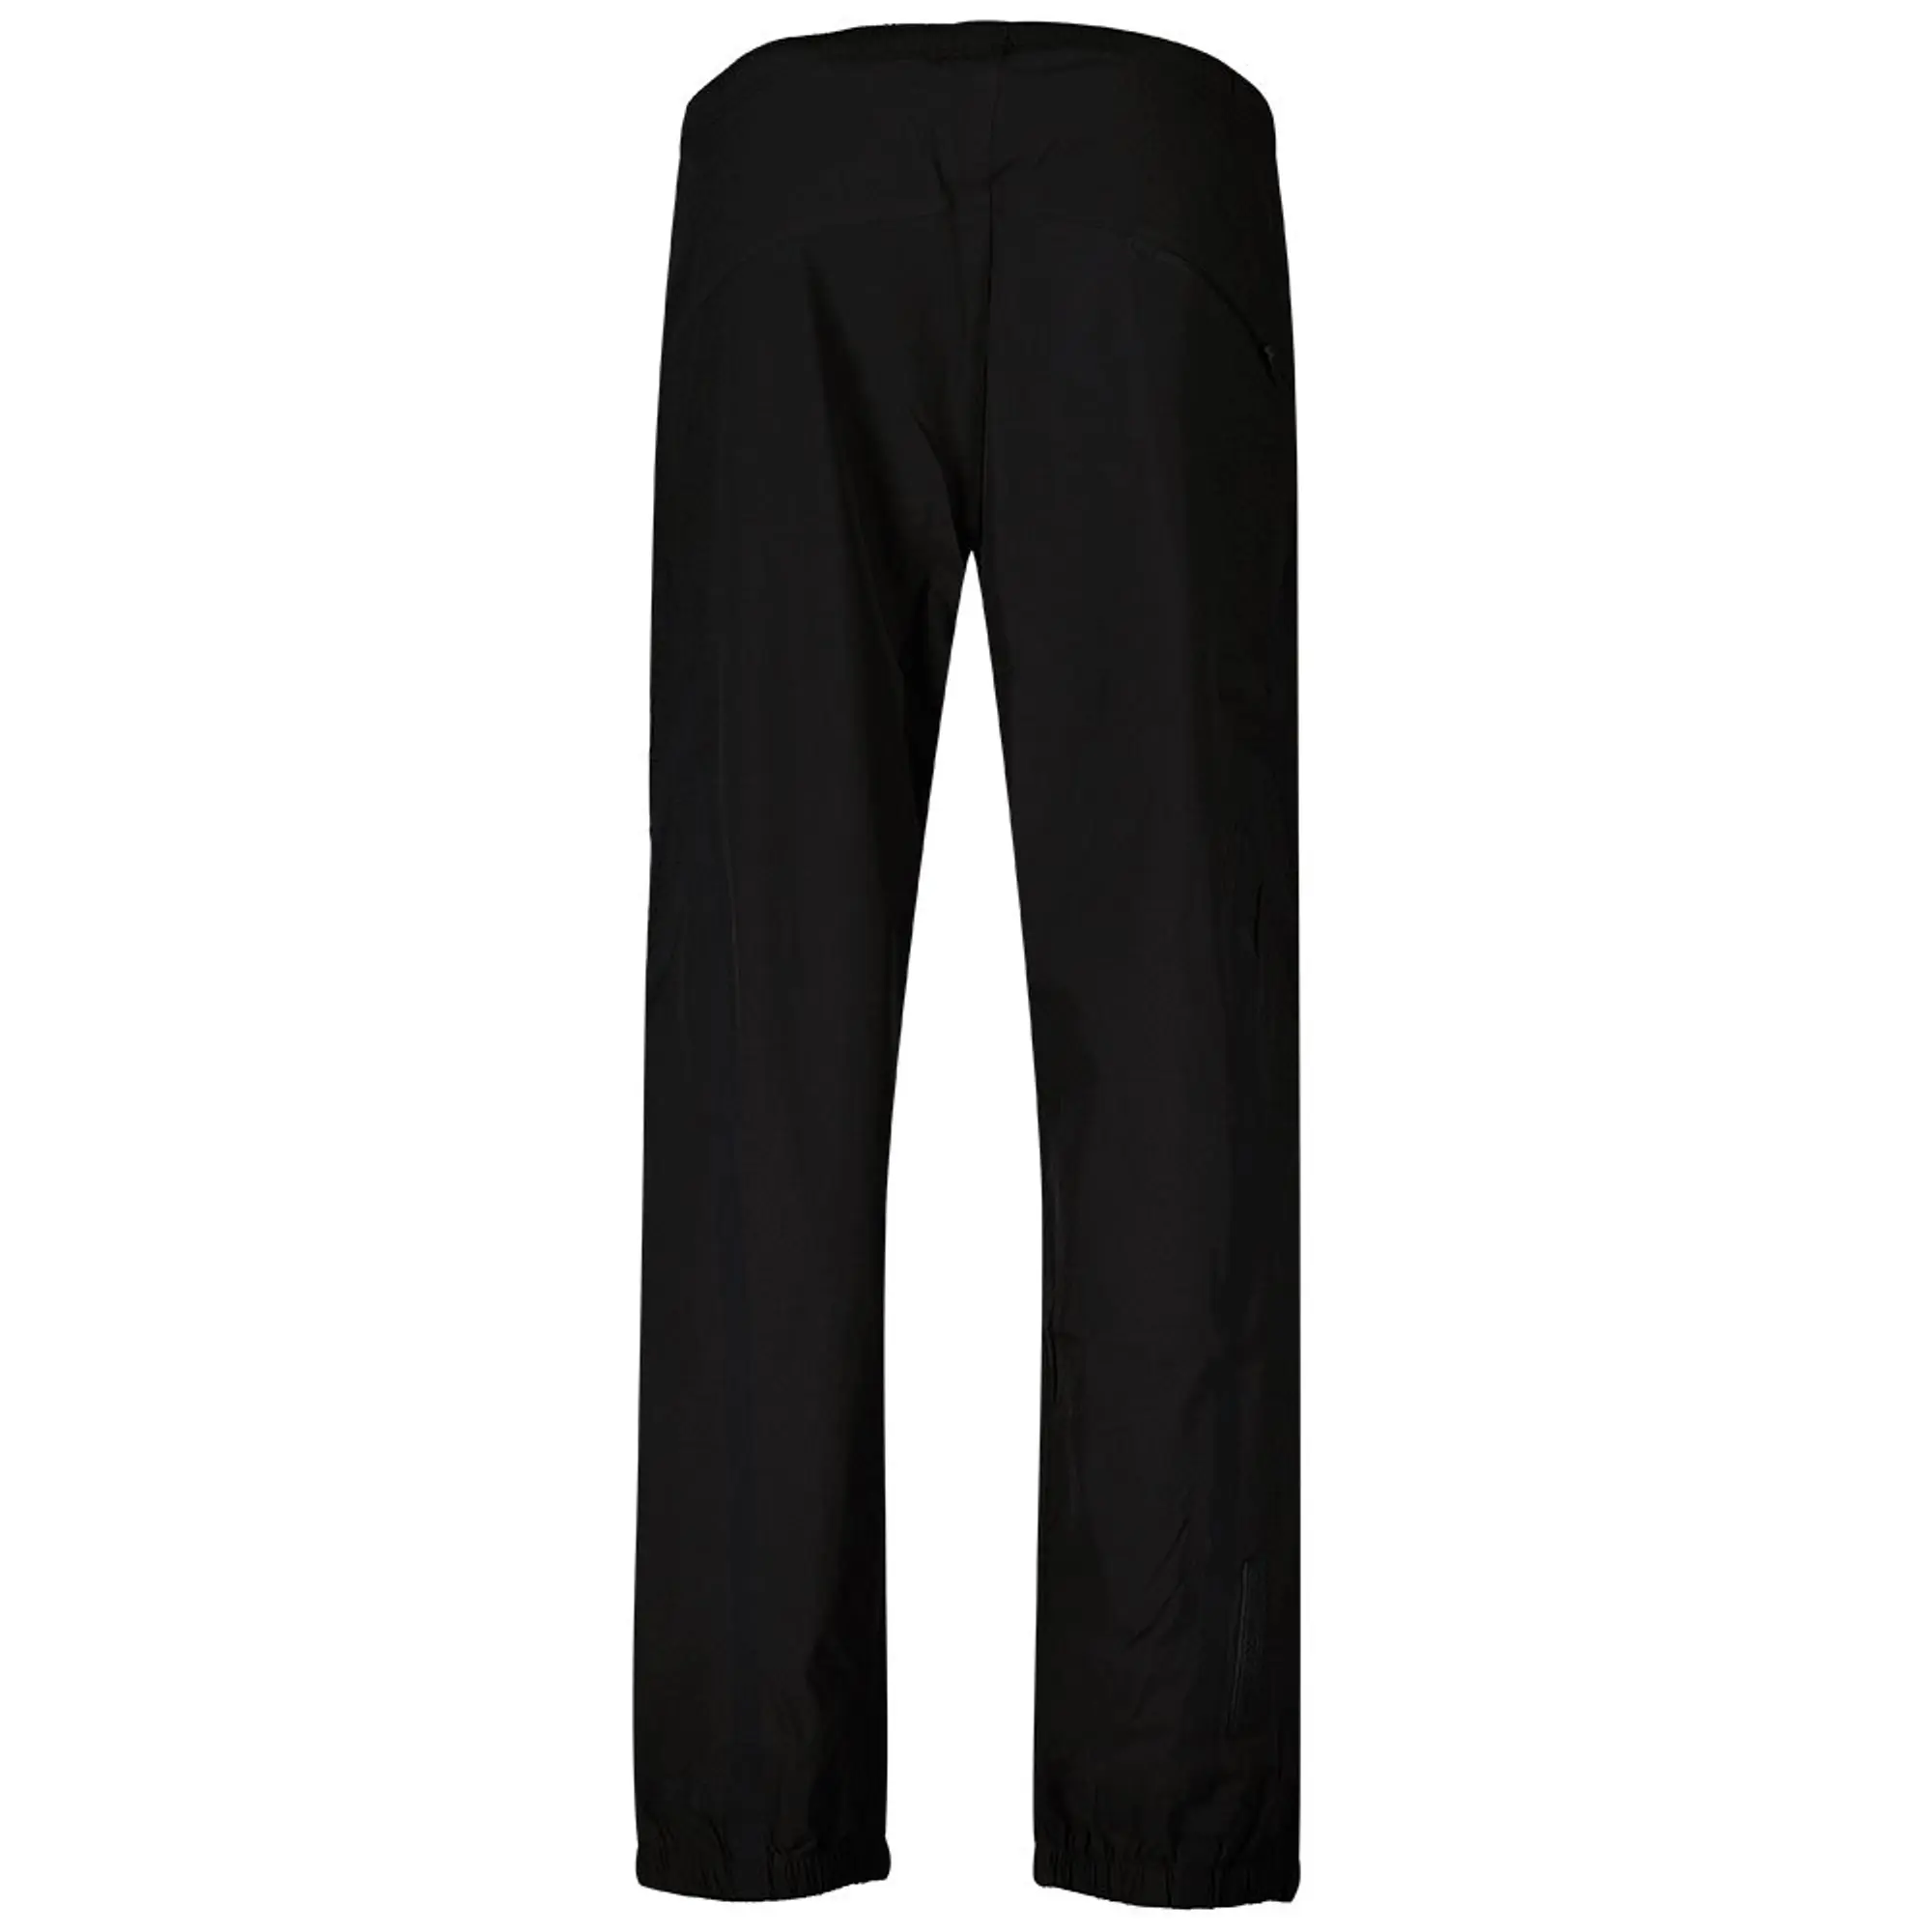 Lacoste Xh6182 Pants  - Black